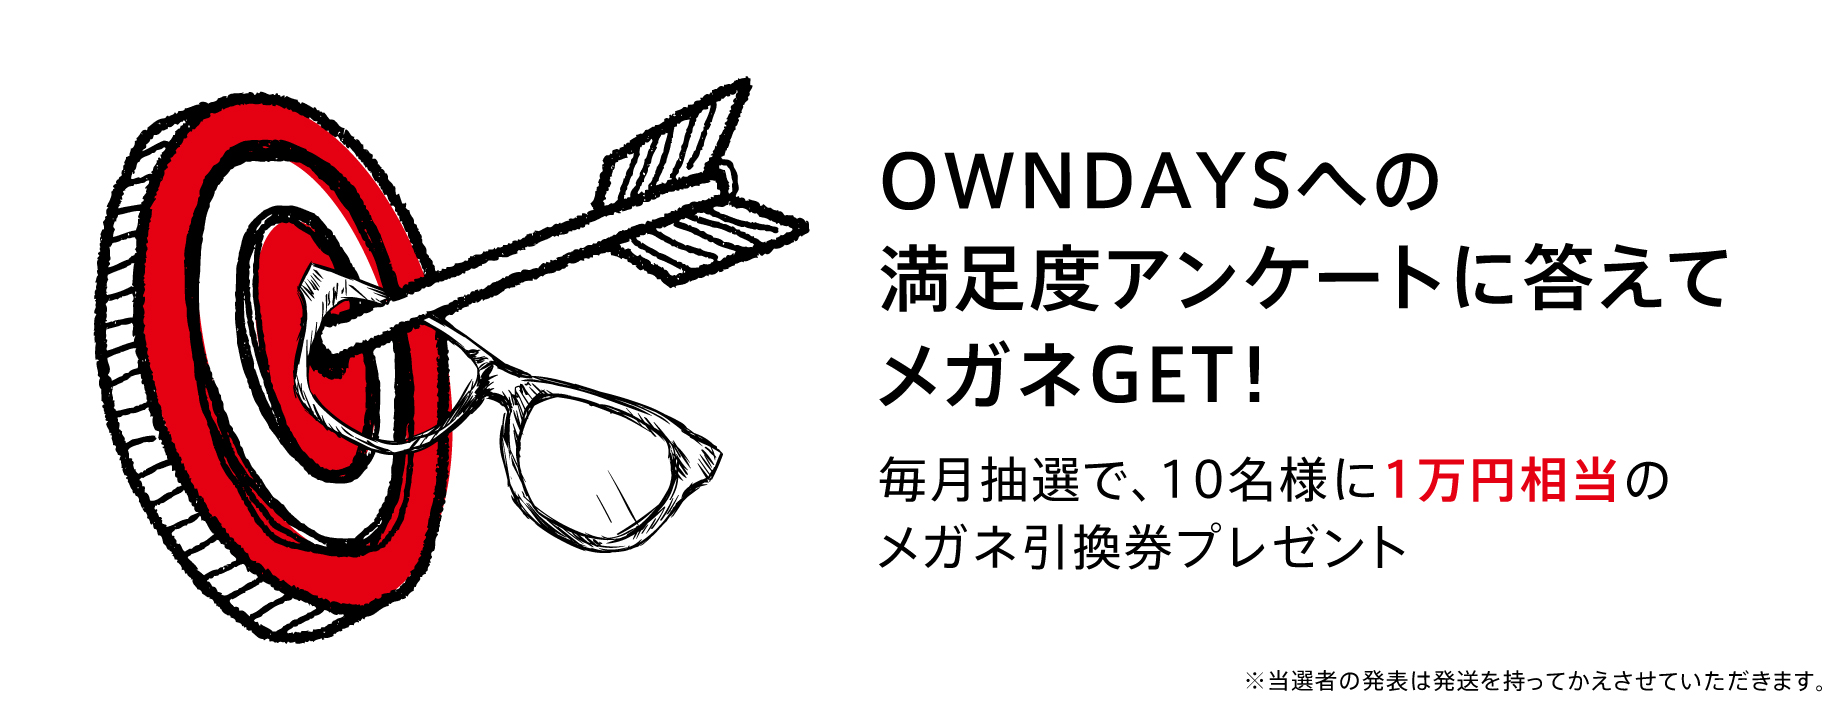 owndays logo